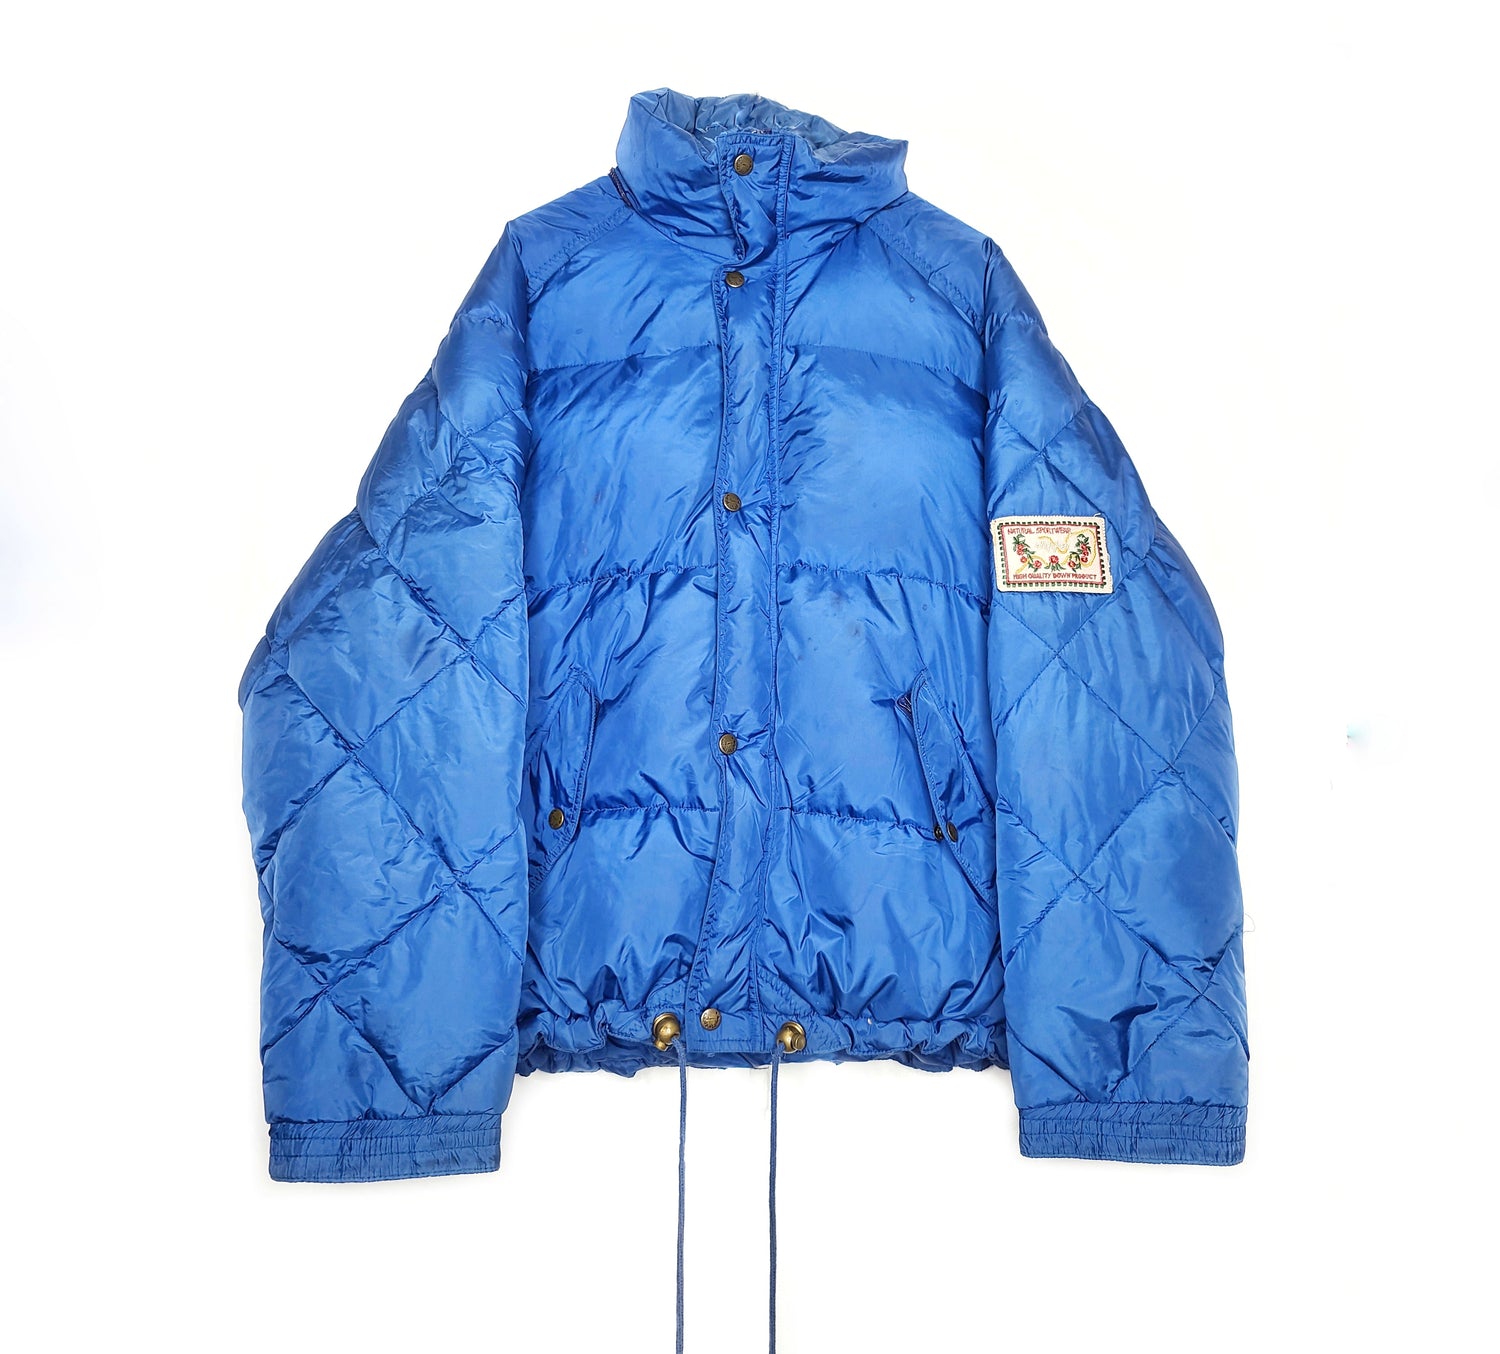 Puffer jacket vintage doudoune oversize 80s oversize bleu